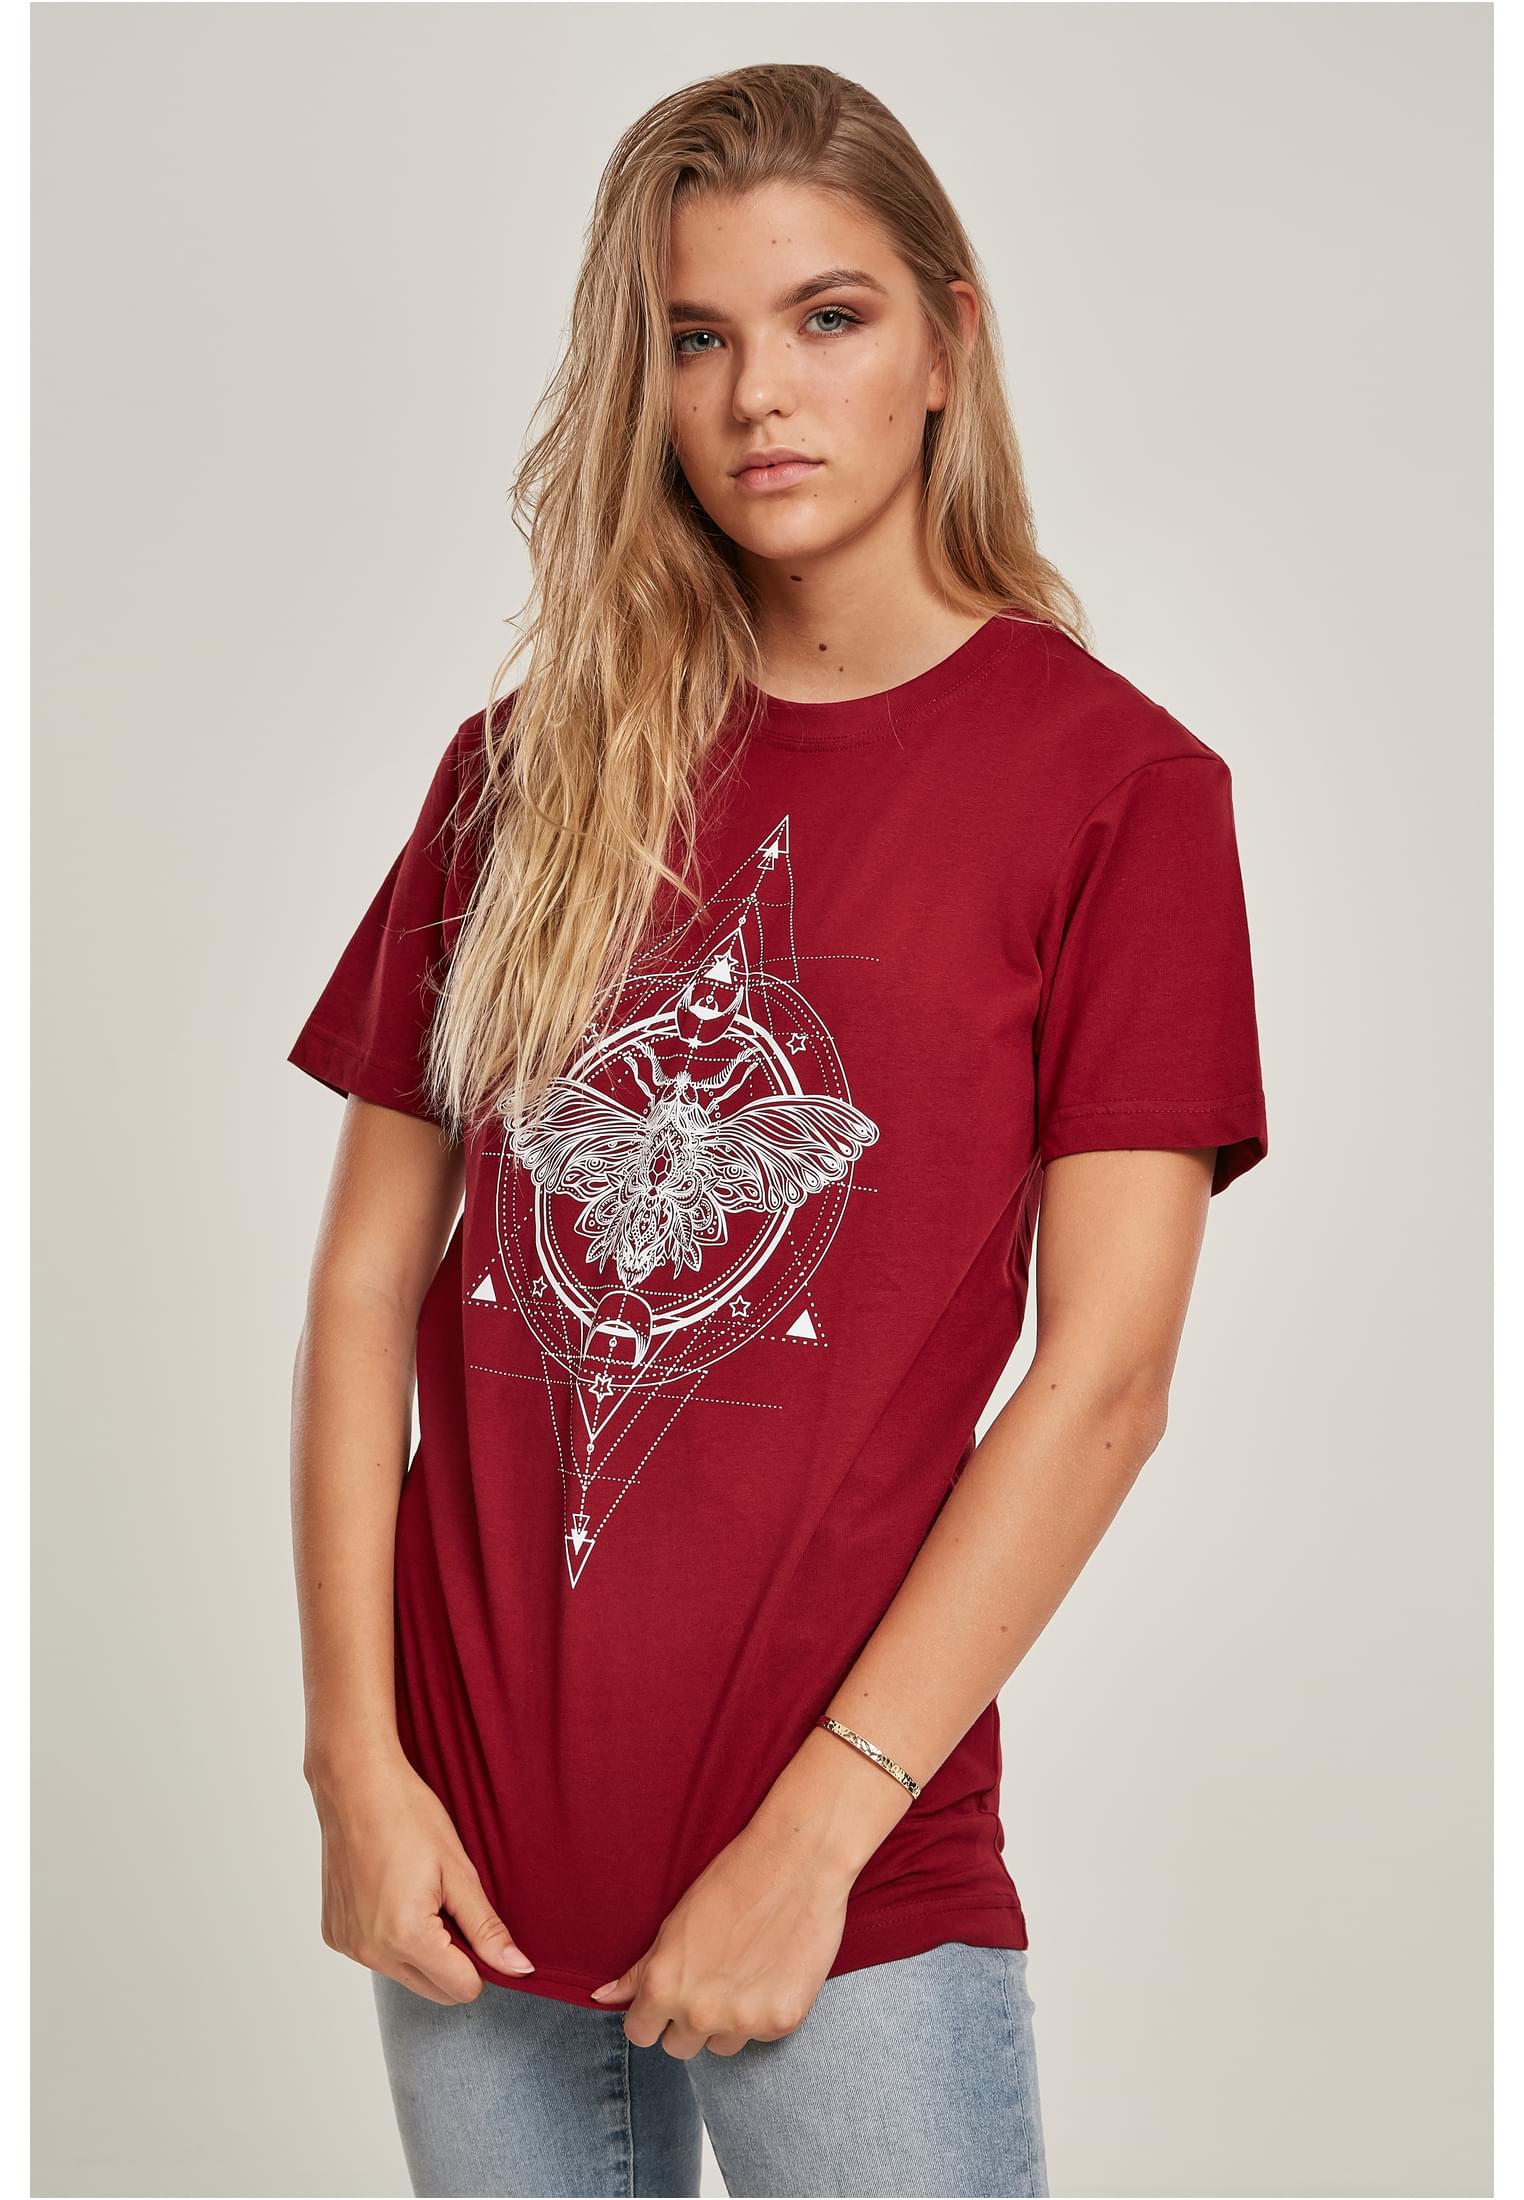 Women's T-shirt from burgundy moth